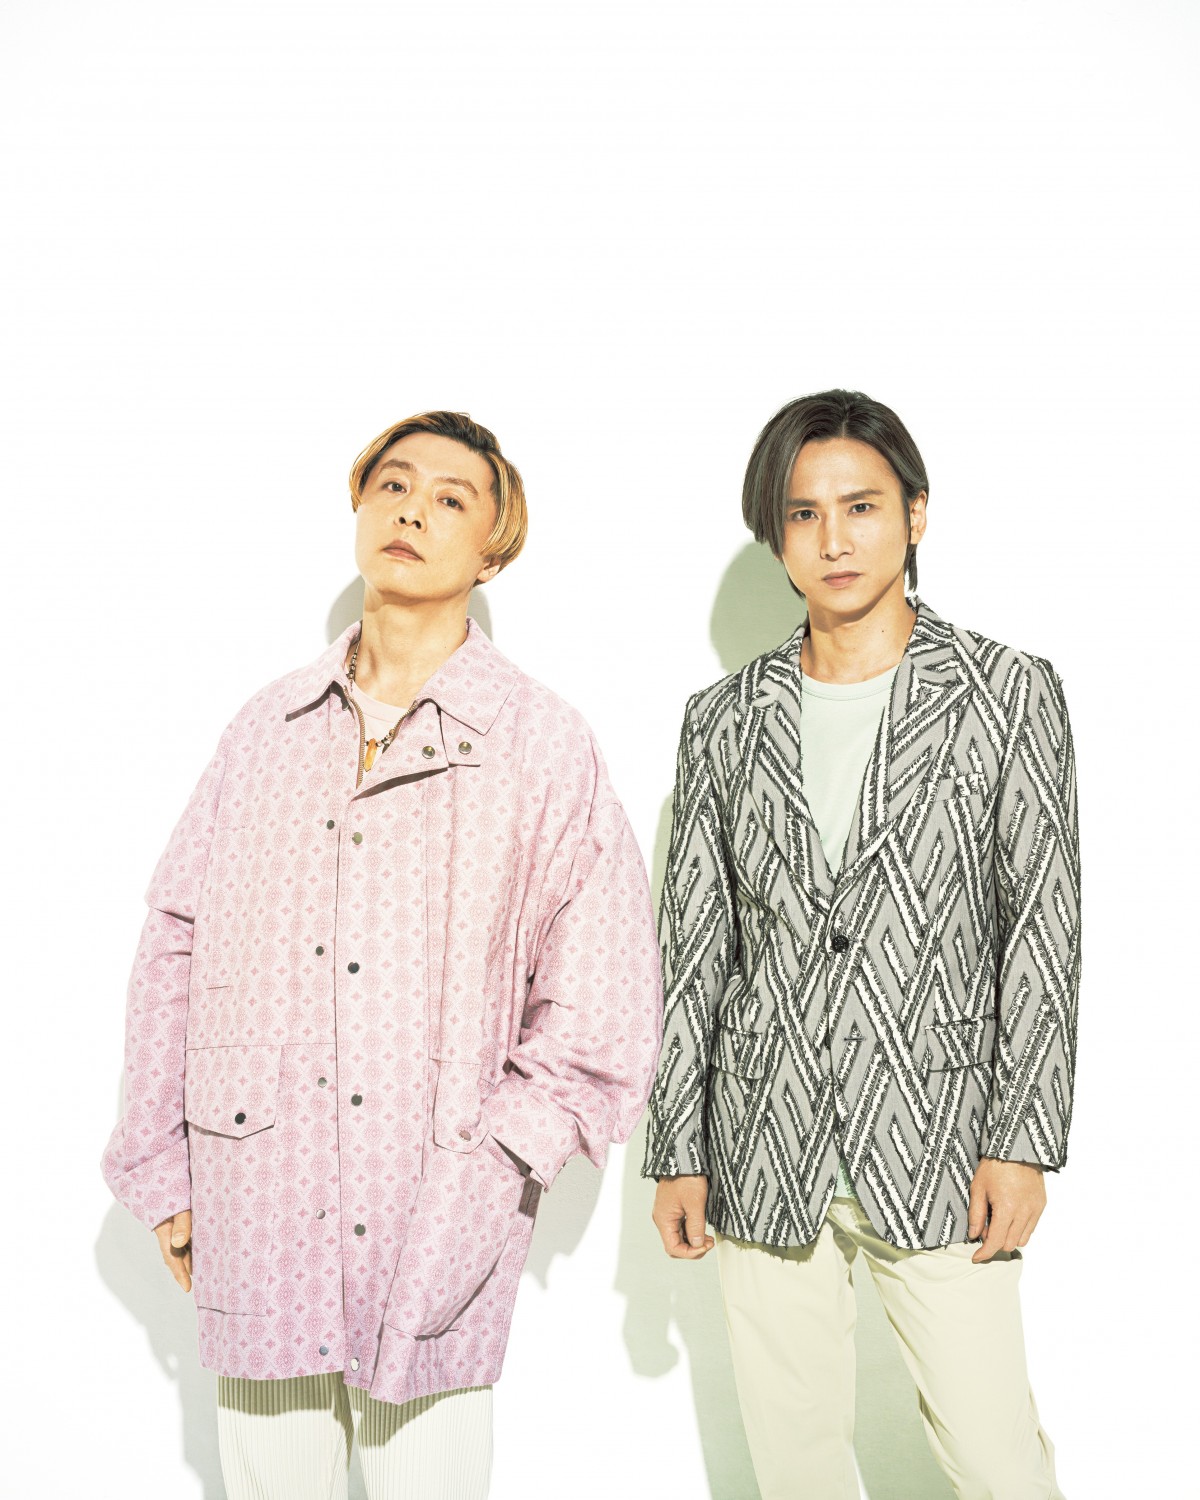 KinKi Kids、25周年第2弾シングルで歌詞を共同制作 作曲は山下達郎 